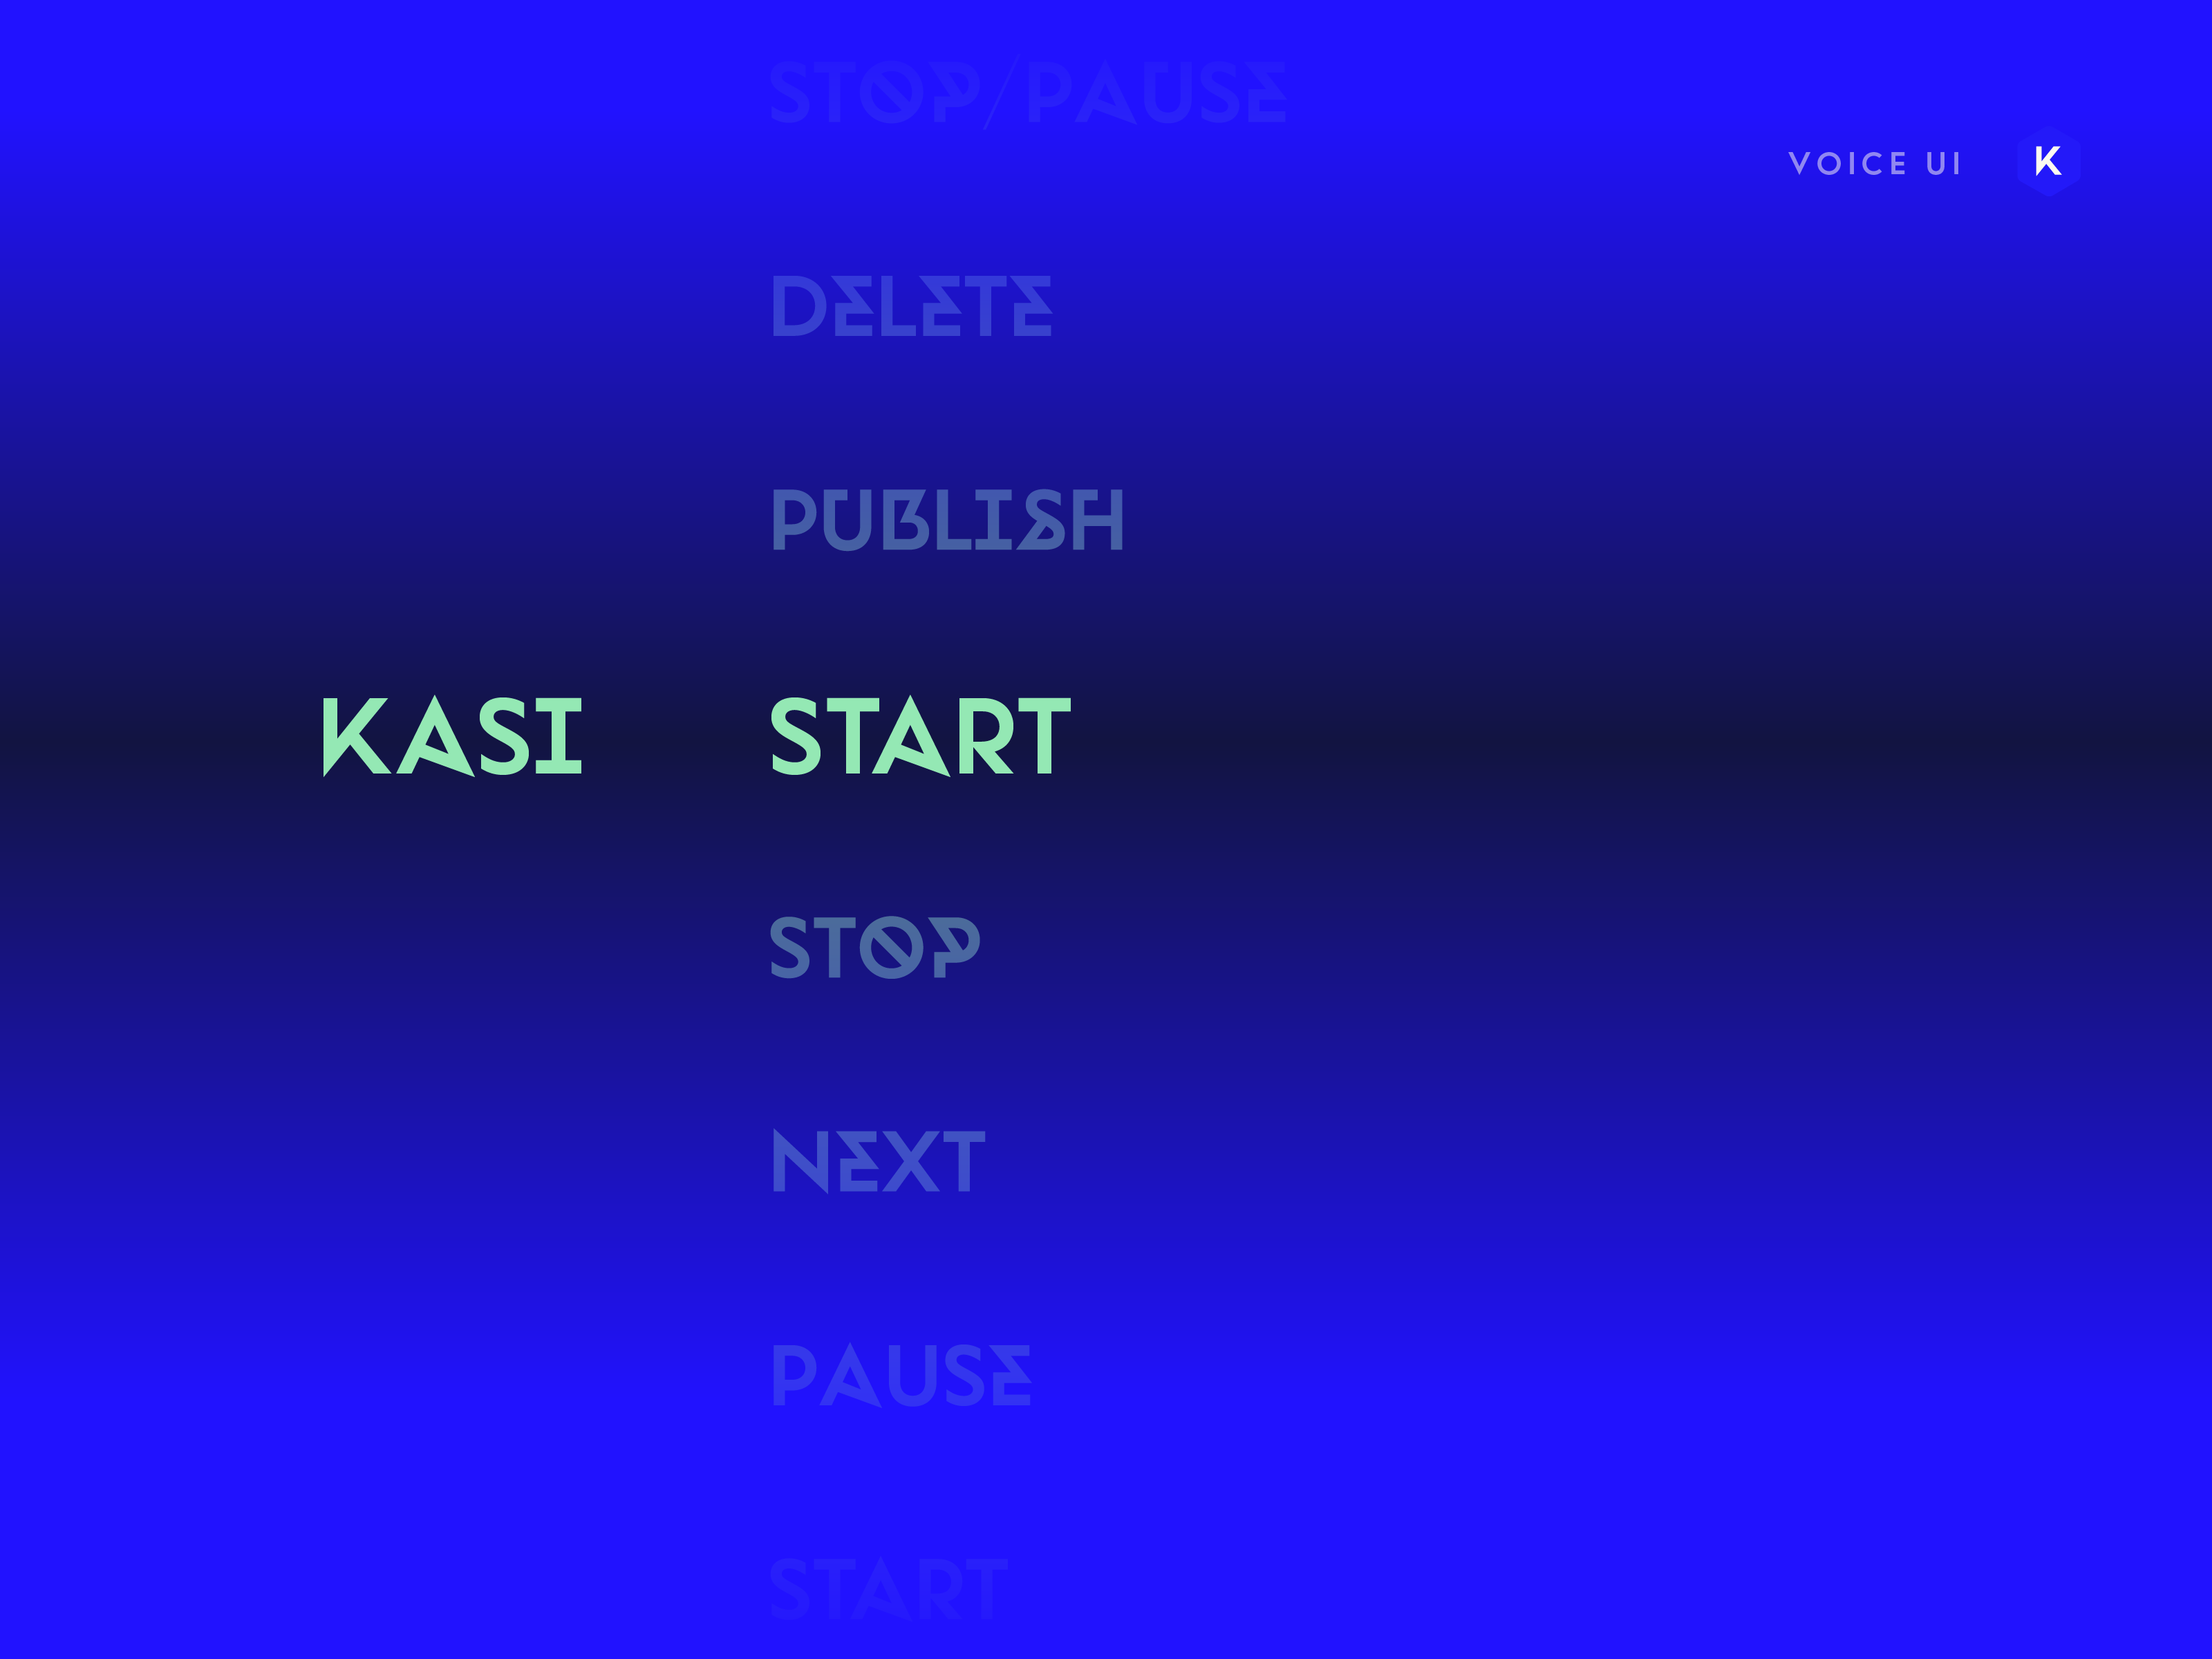 kasi drive voice interaction